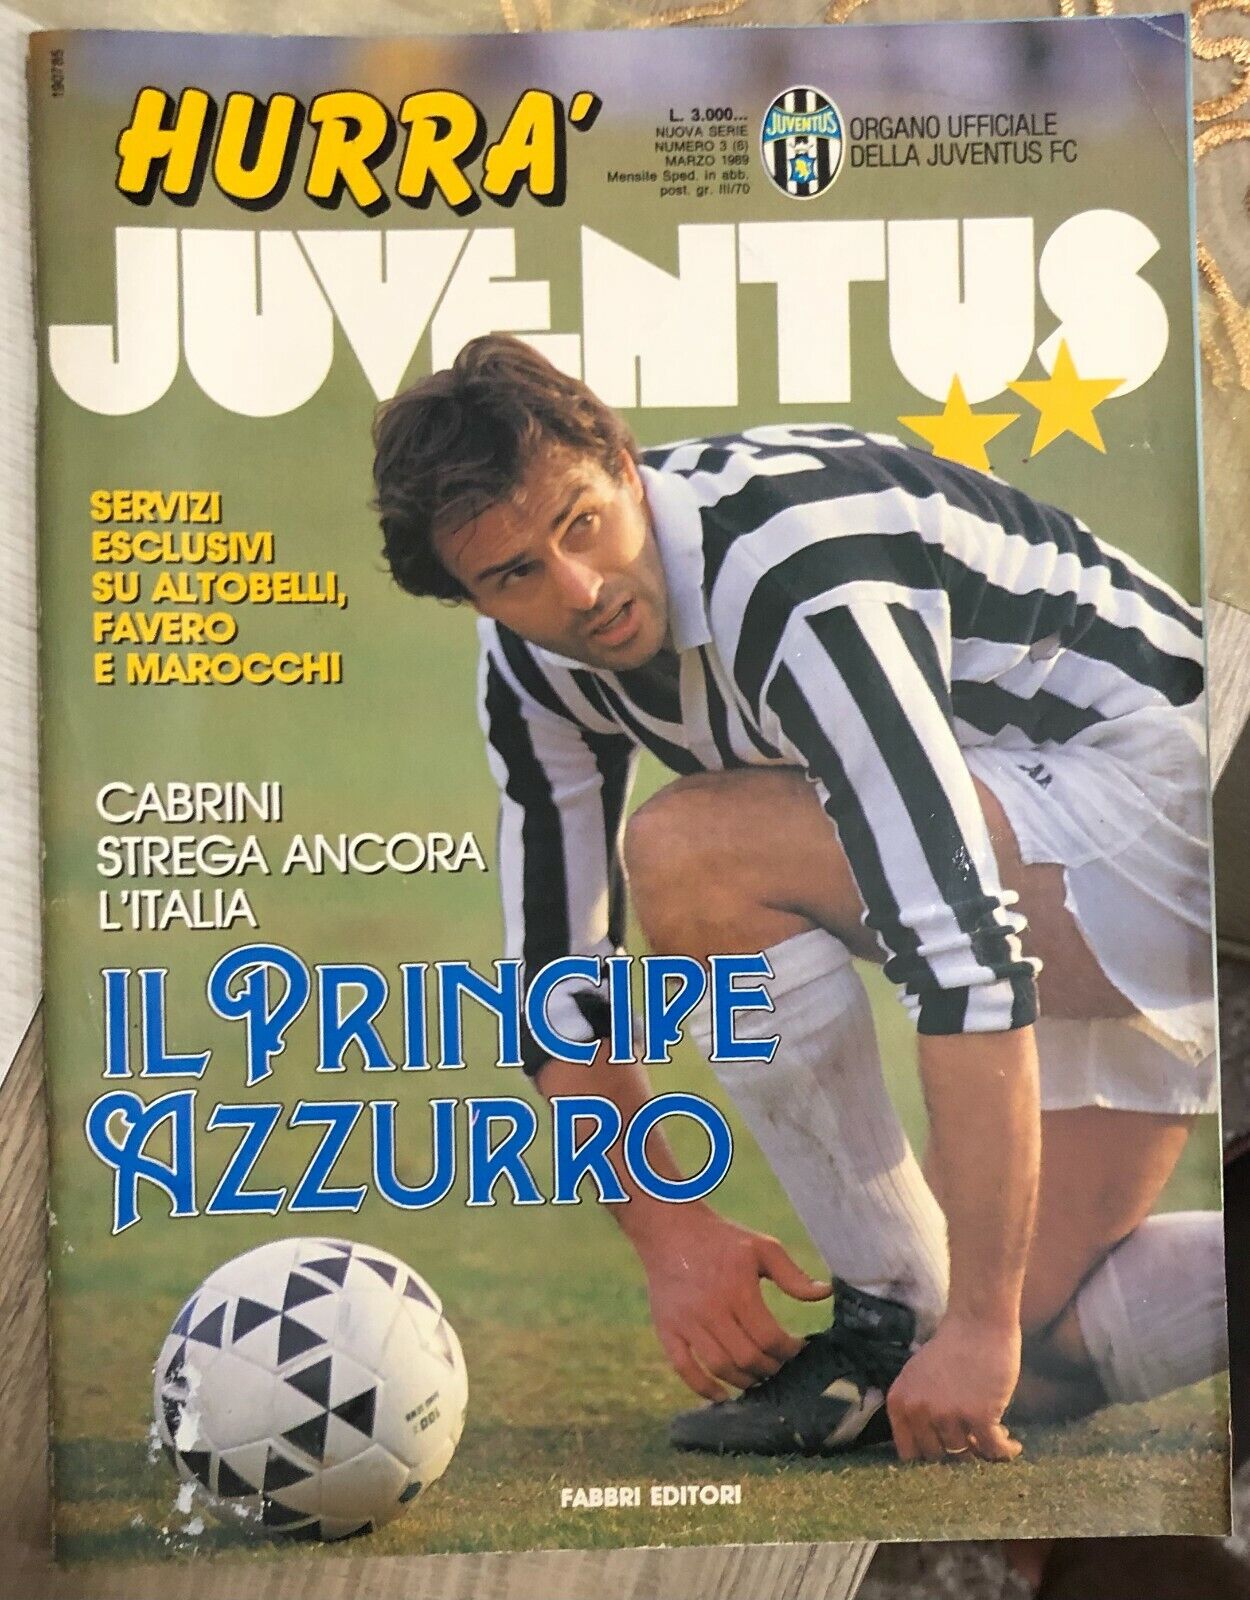 Hurr? Juventus n. 3/1989 di Juventus F.c.,  1989,  Fabbri Editori